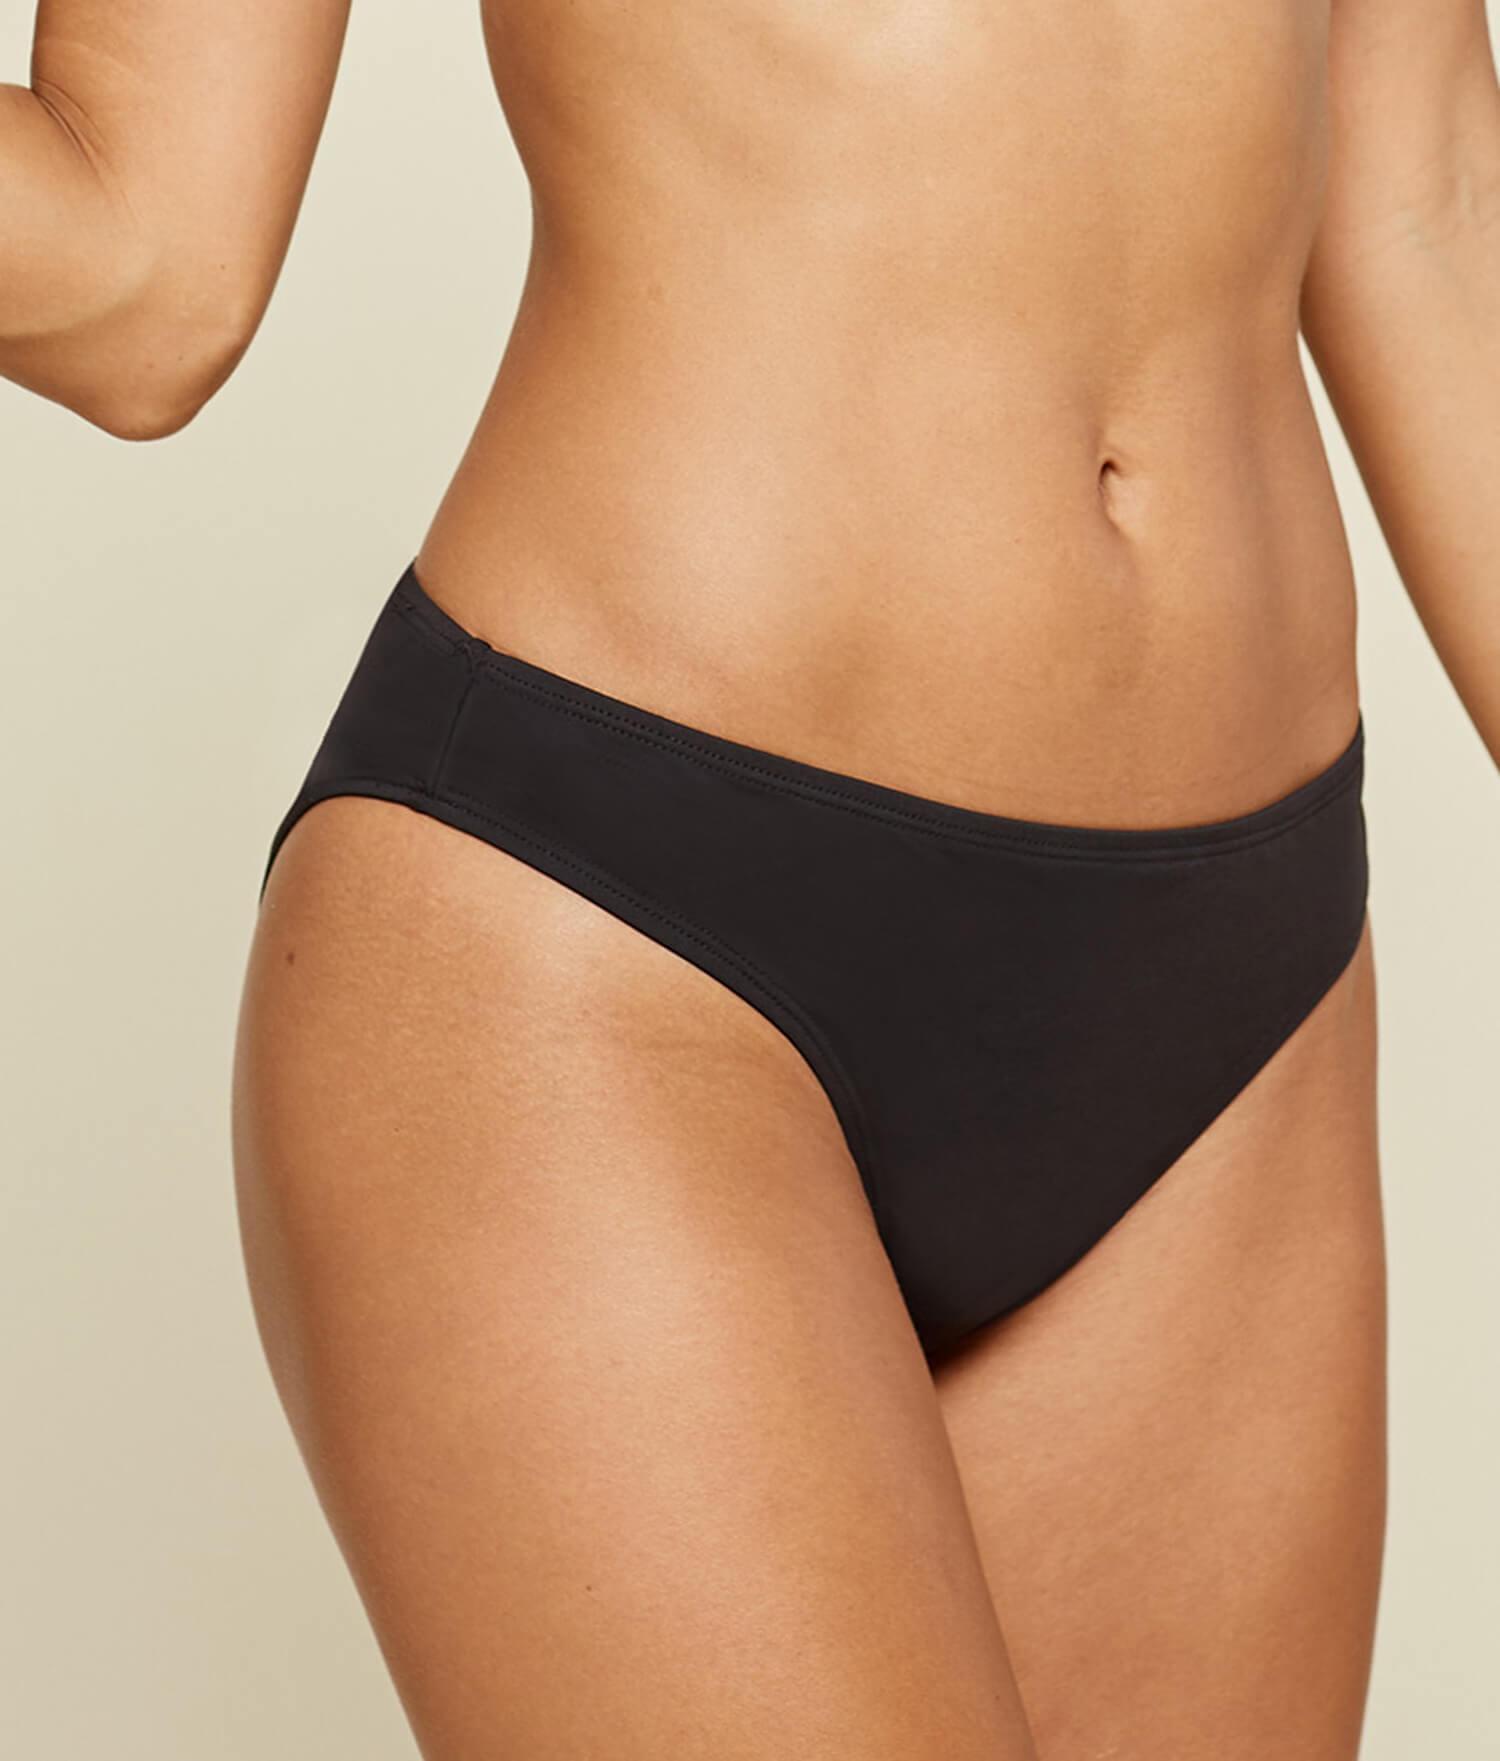 How Should a Bikini Fit  Bikini Fitting Guide – Lounge Underwear